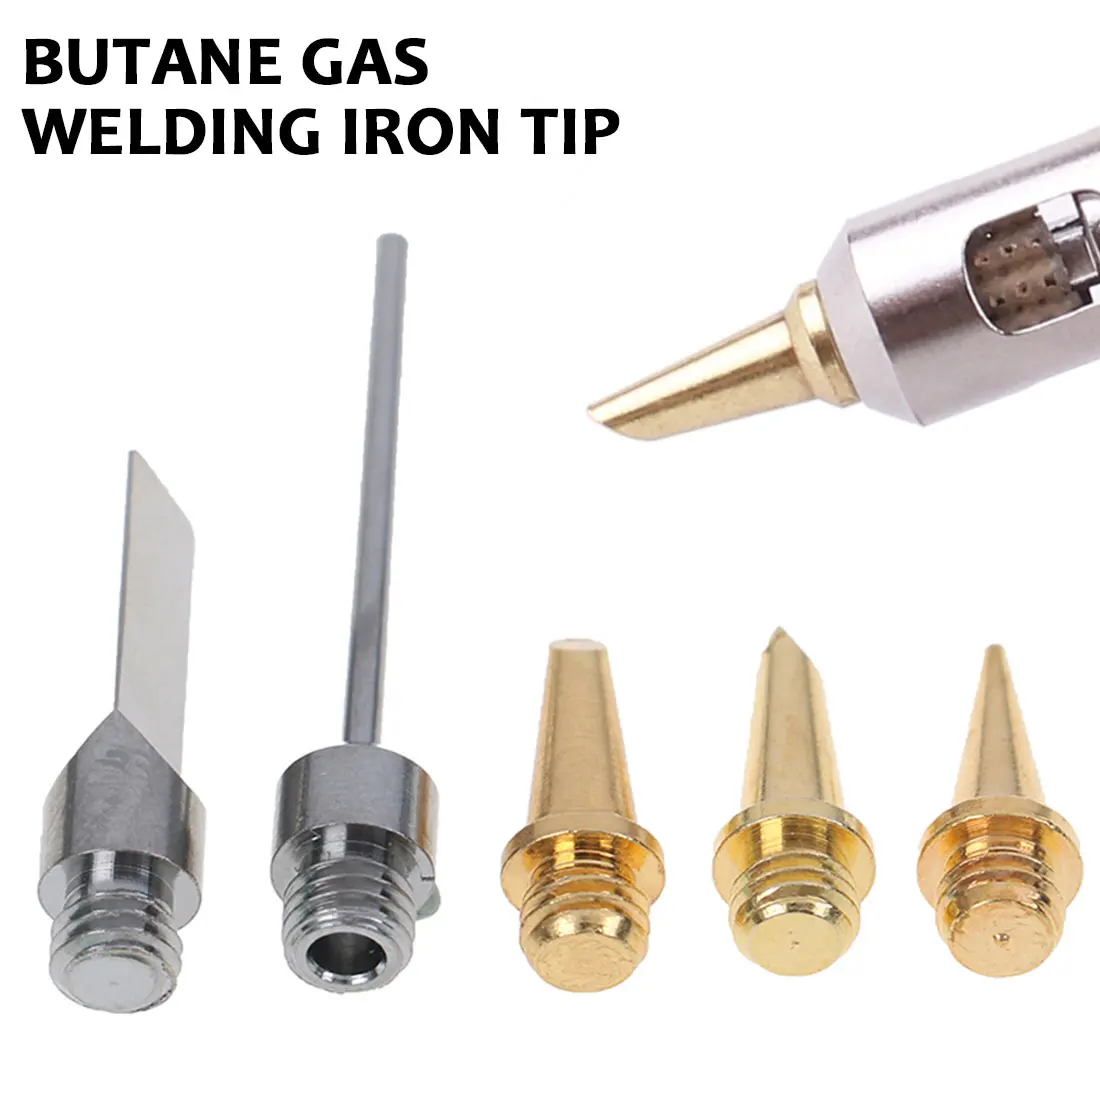 

7 Pcs Butane Gas Soldering Iron Tips Set For Electric Blow Torch Gun Wireless Portable